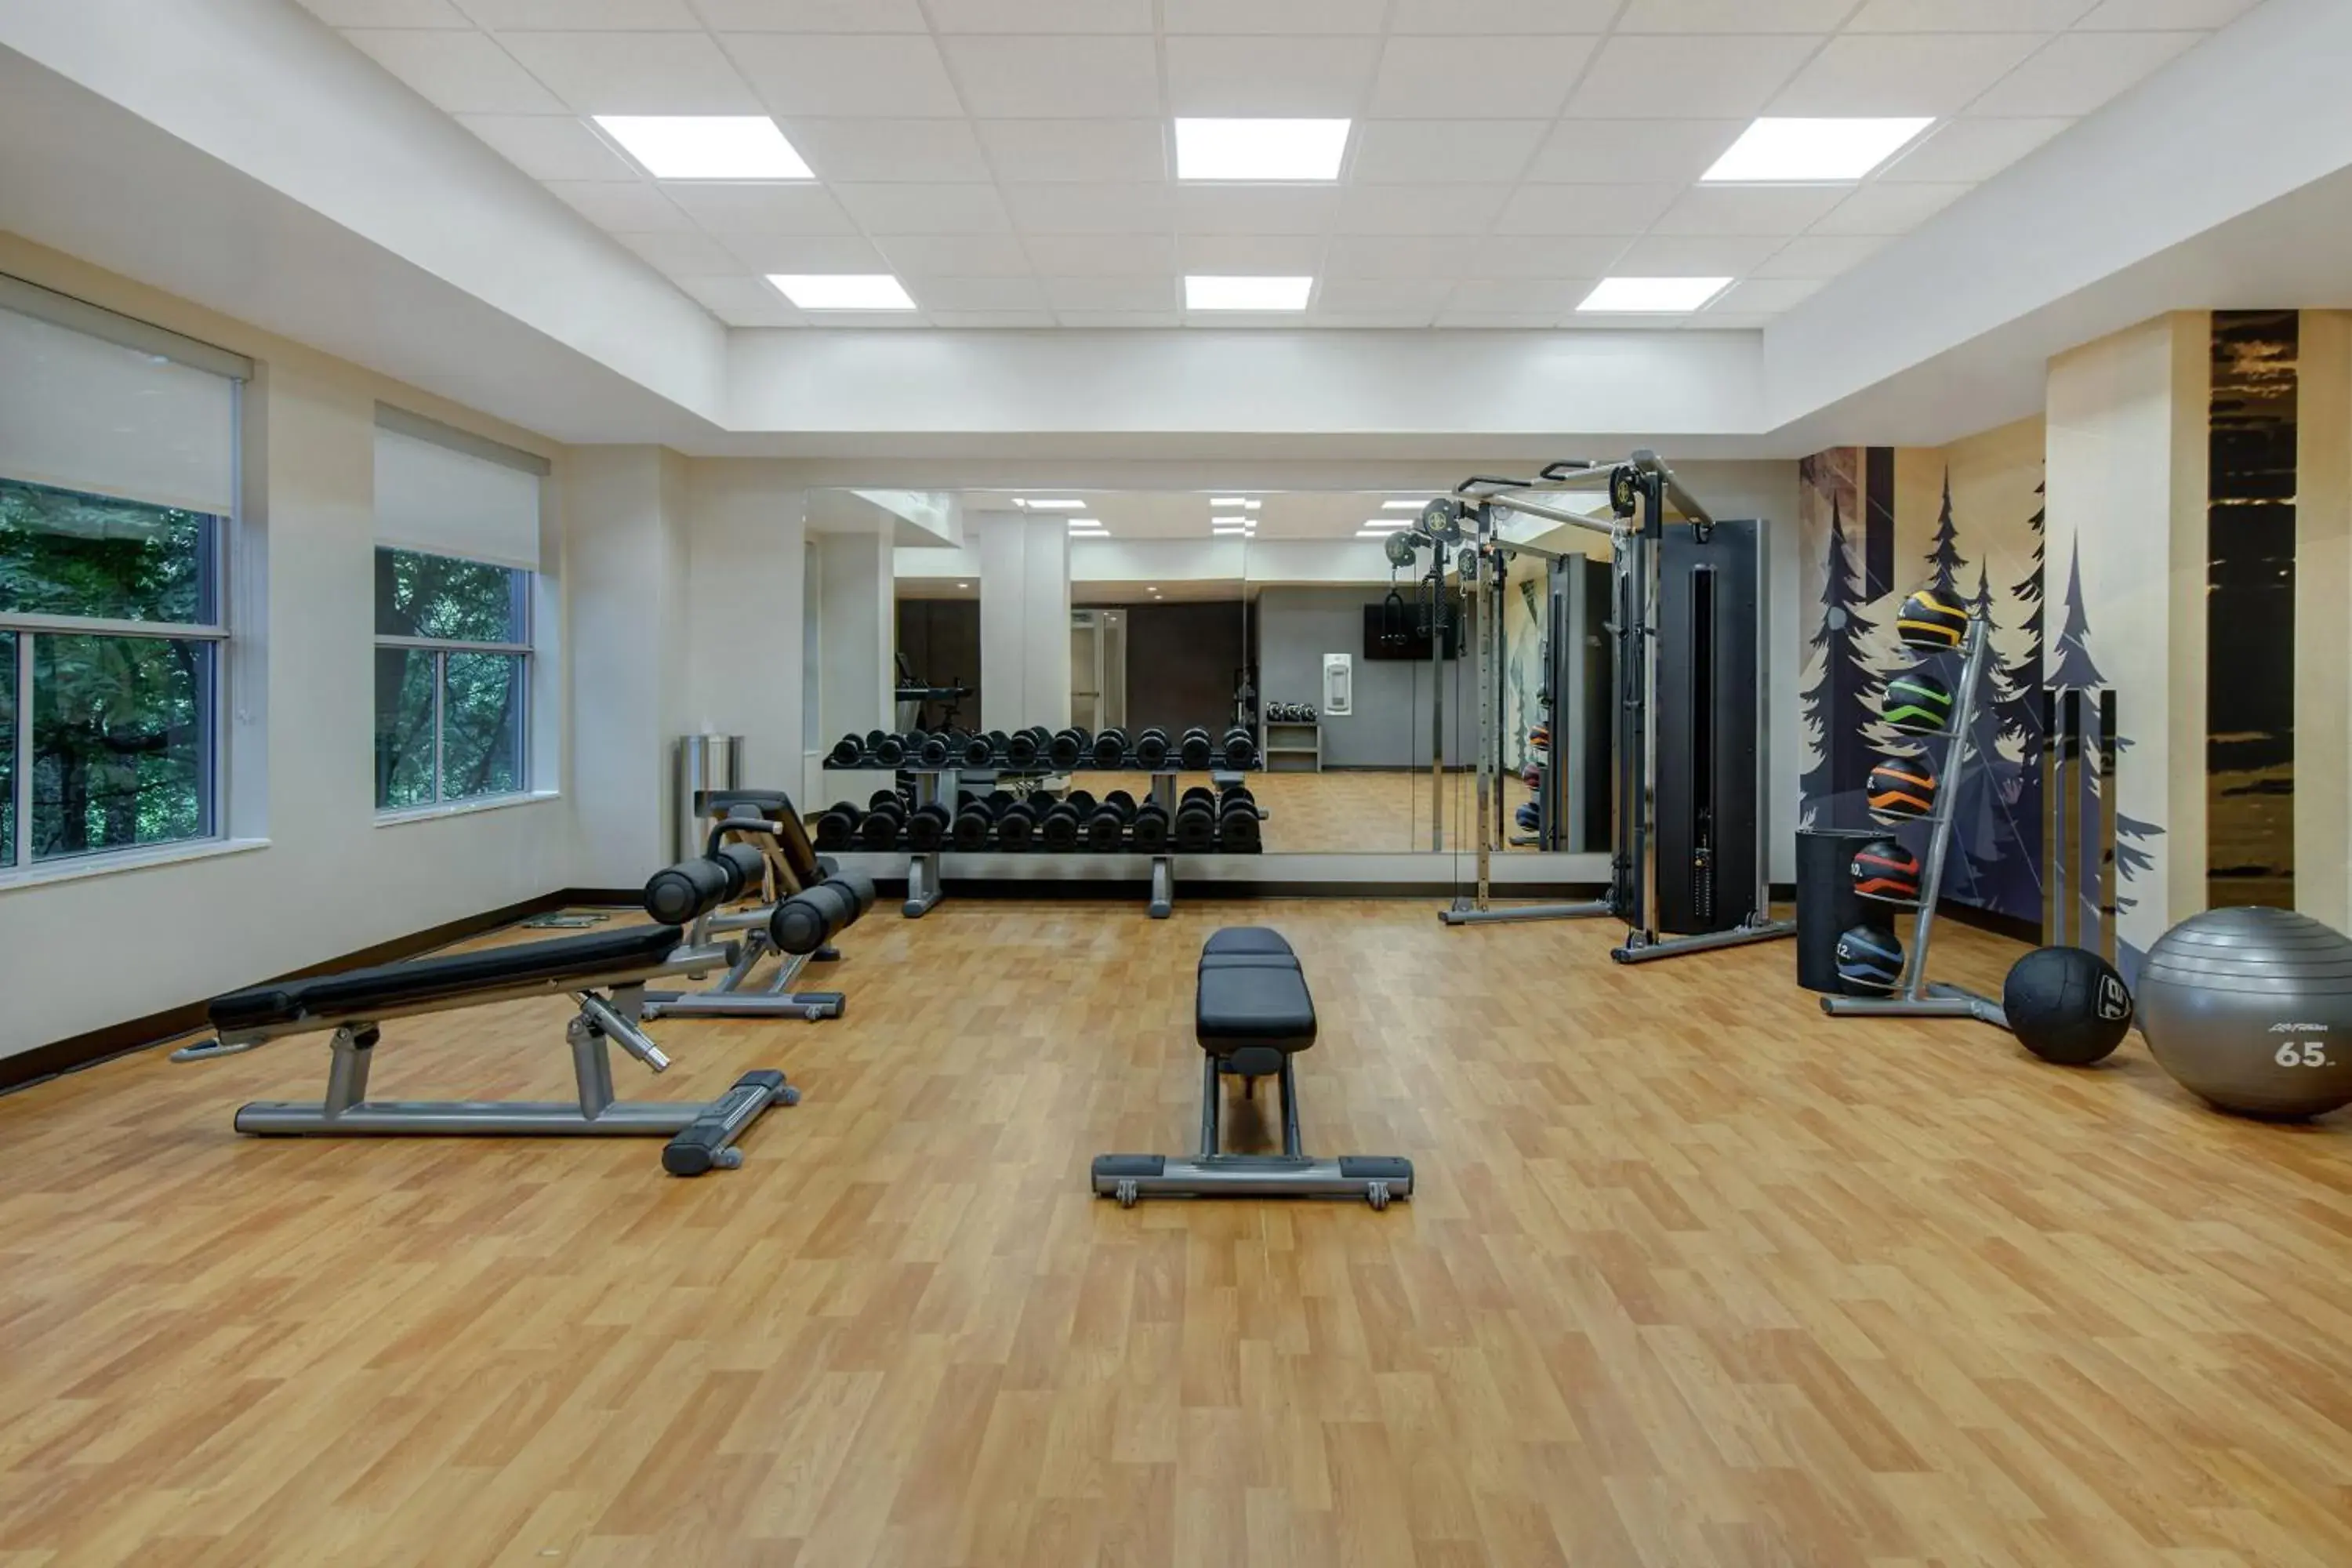 Fitness centre/facilities, Fitness Center/Facilities in Hyatt House Mall Of America Msp Airport